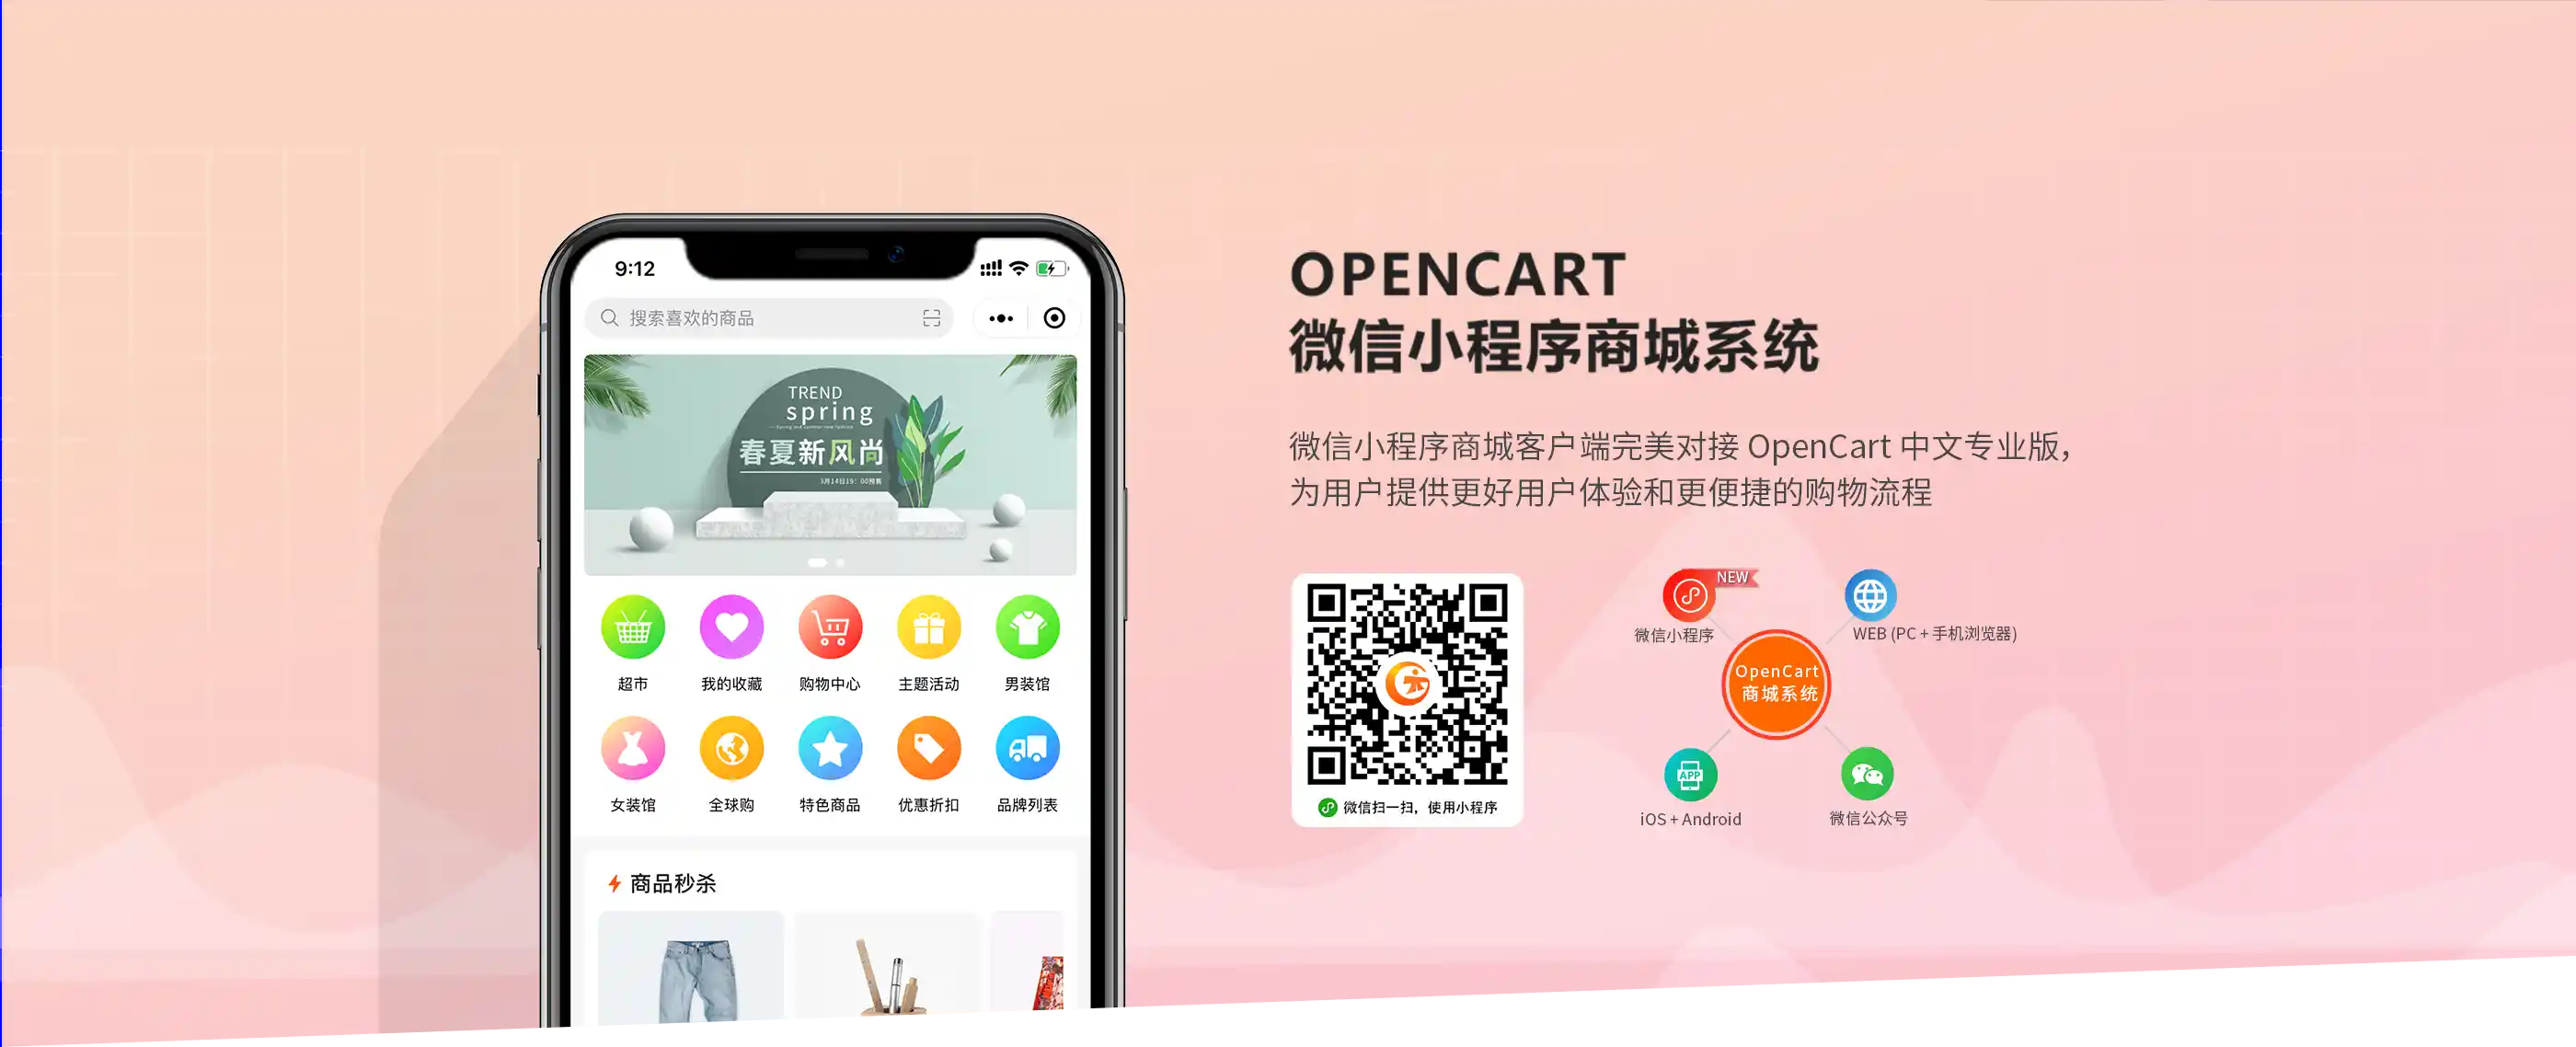 OpenCart 微信小程序商城